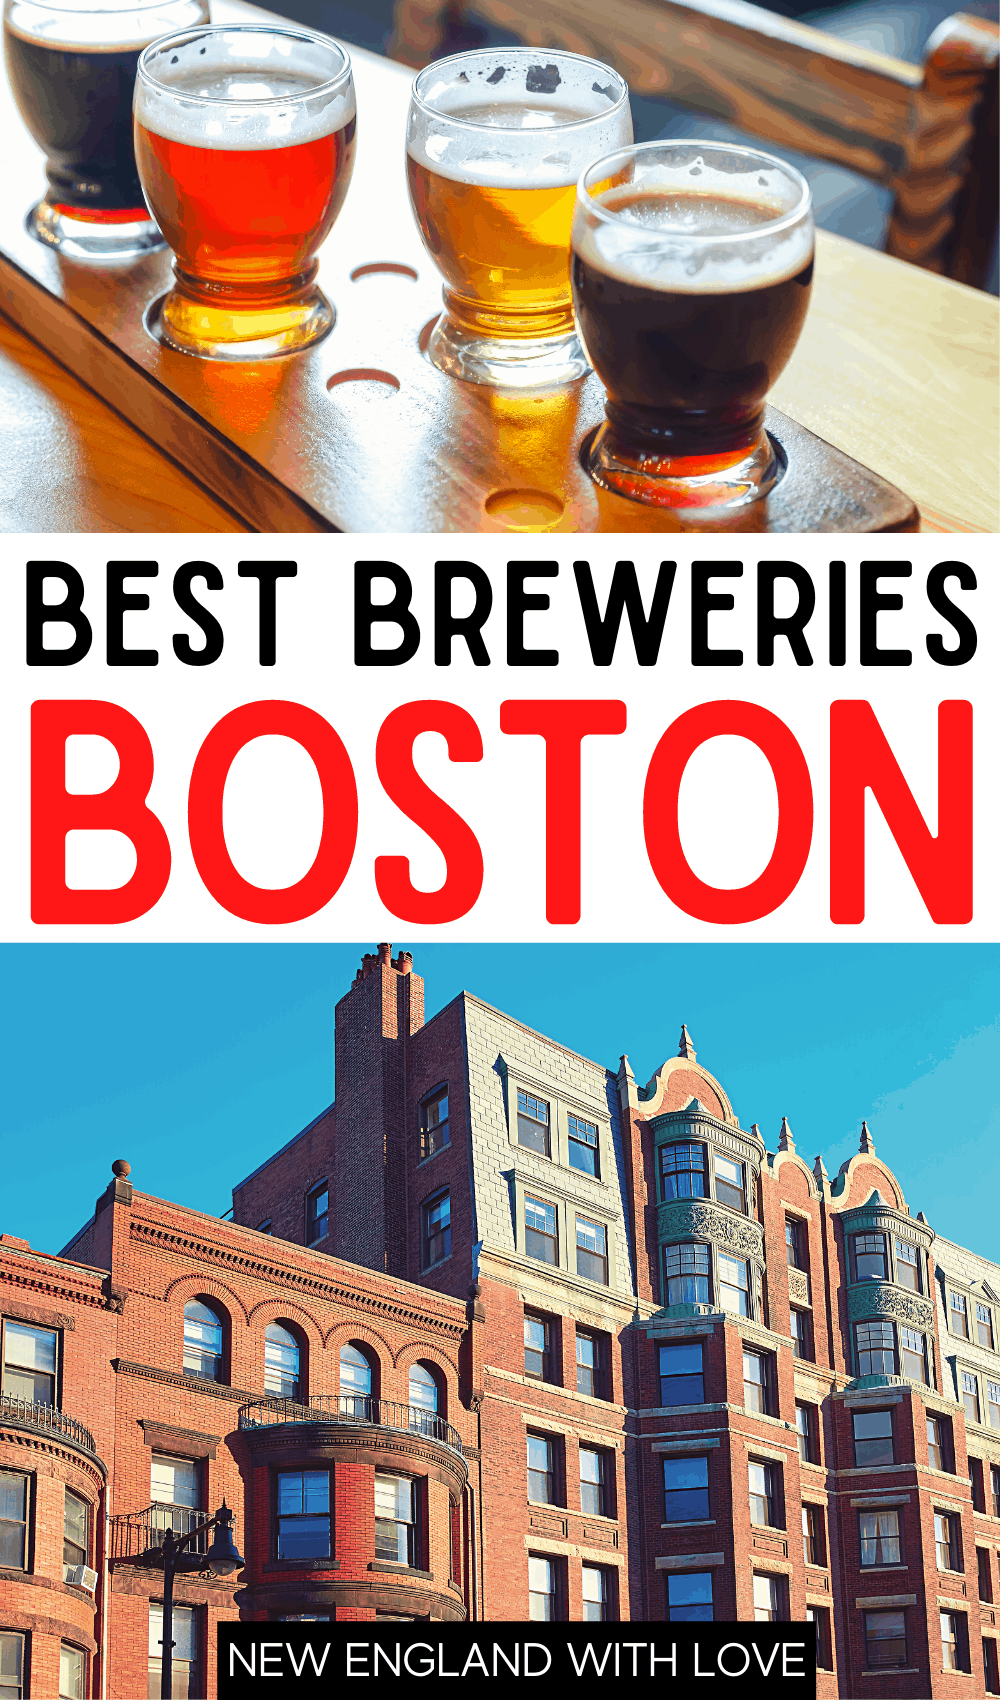 Pinterest graphic reading "BEST BREWERIES BOSTON"